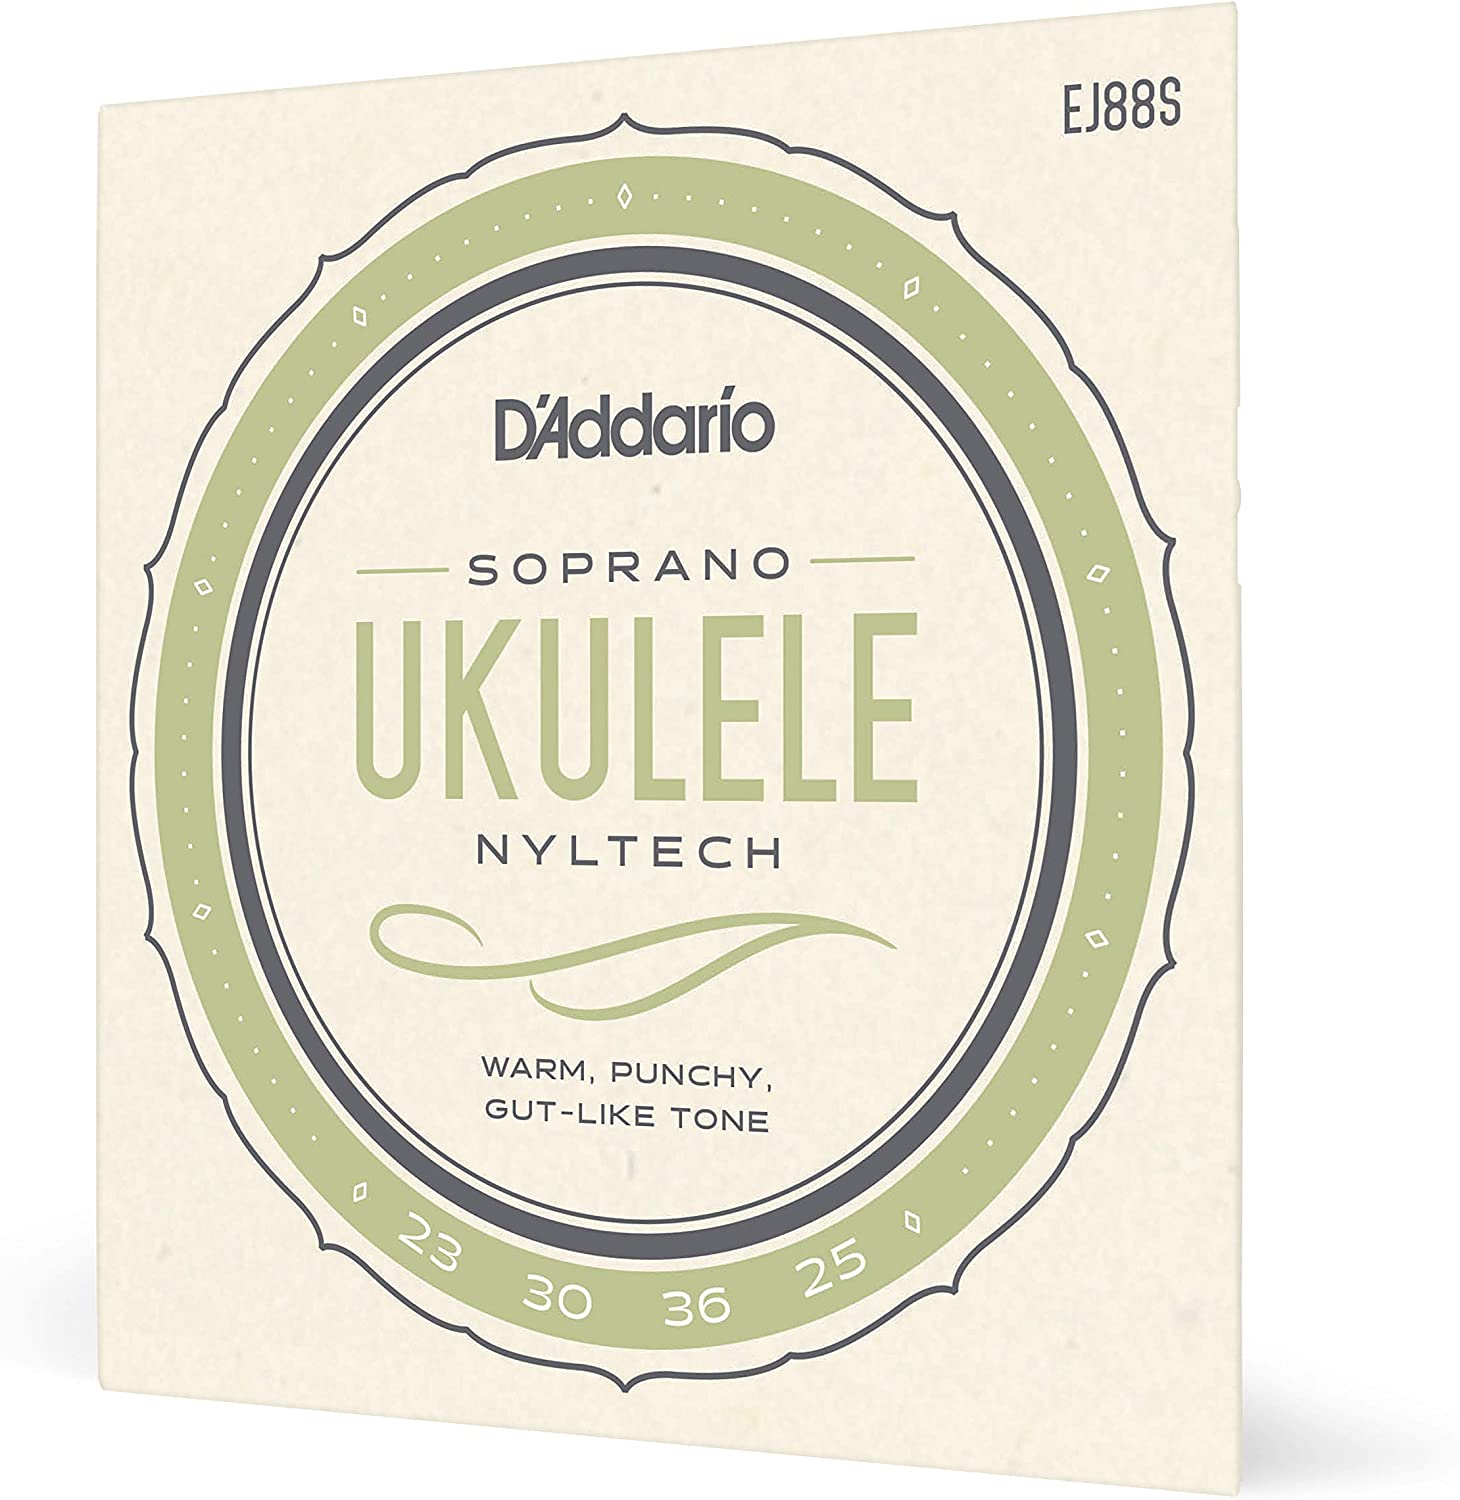 D'Addario Nyltech Ukulele Strings - Soprano | Musical Accessories | Halabh.com